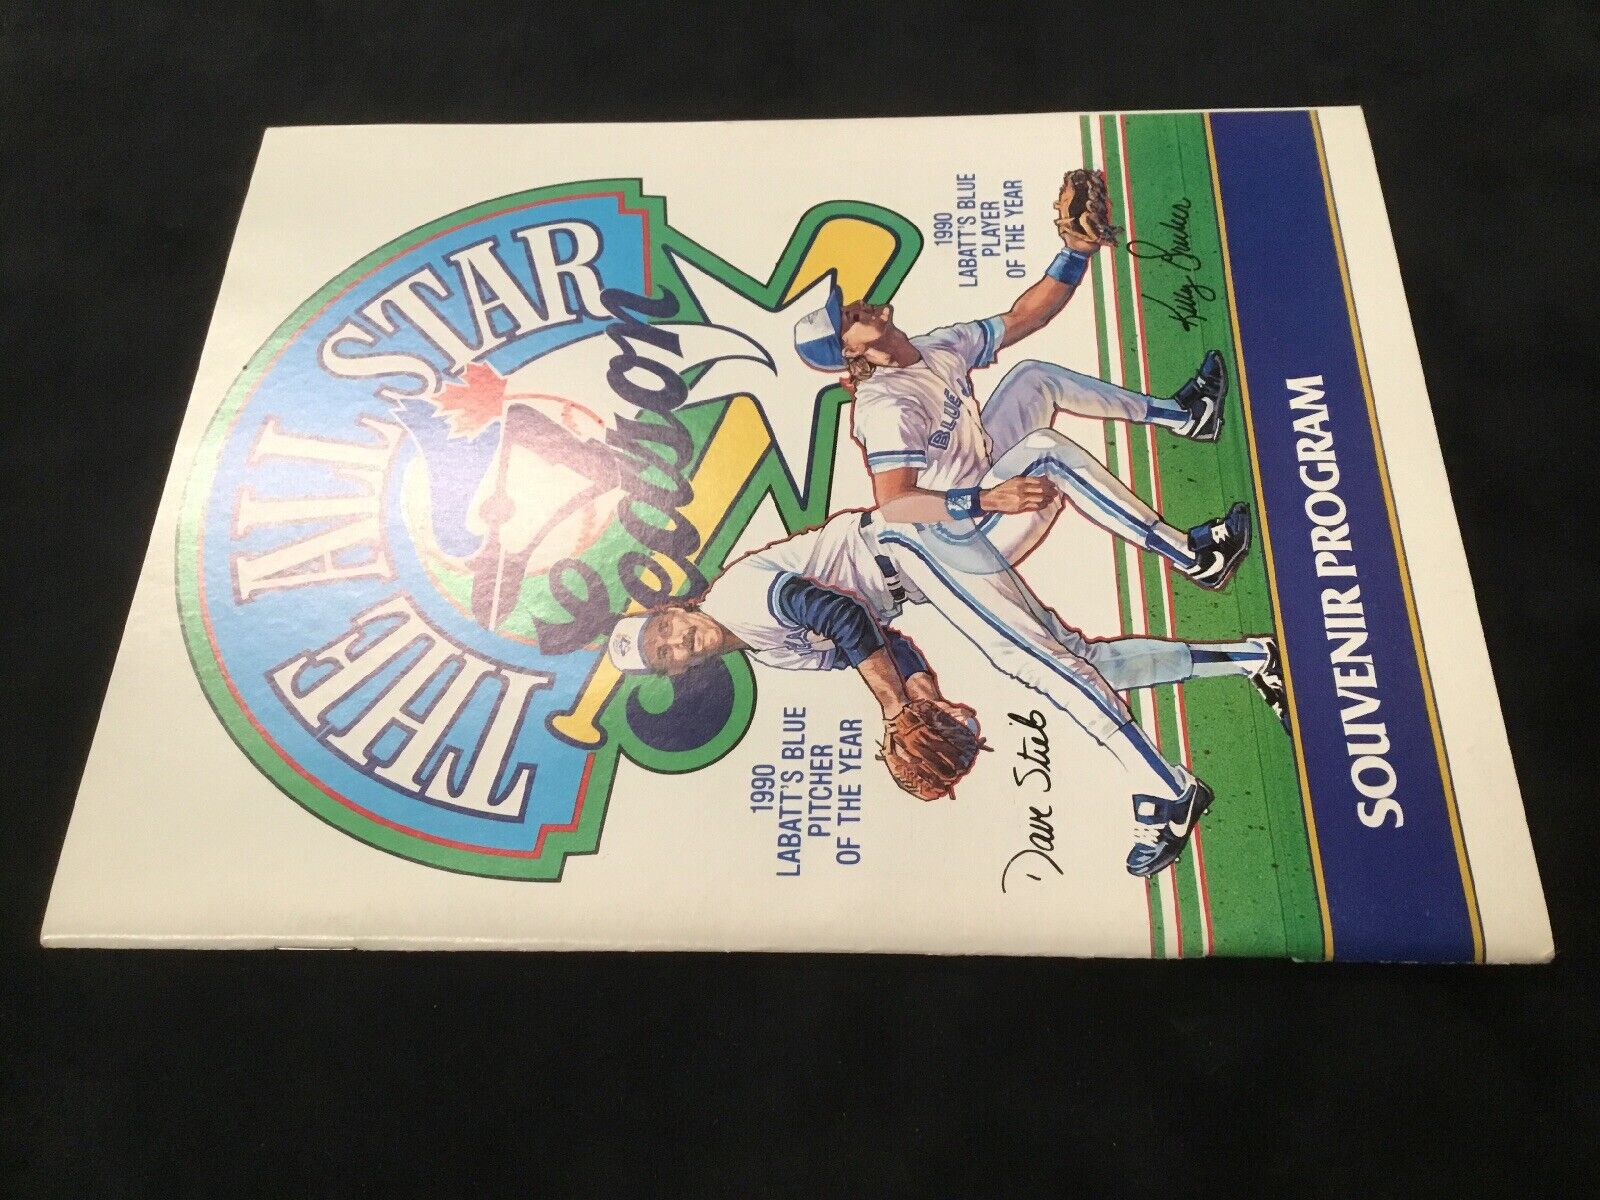 1991 Toronto Blue Jays Souvenir All Star Program